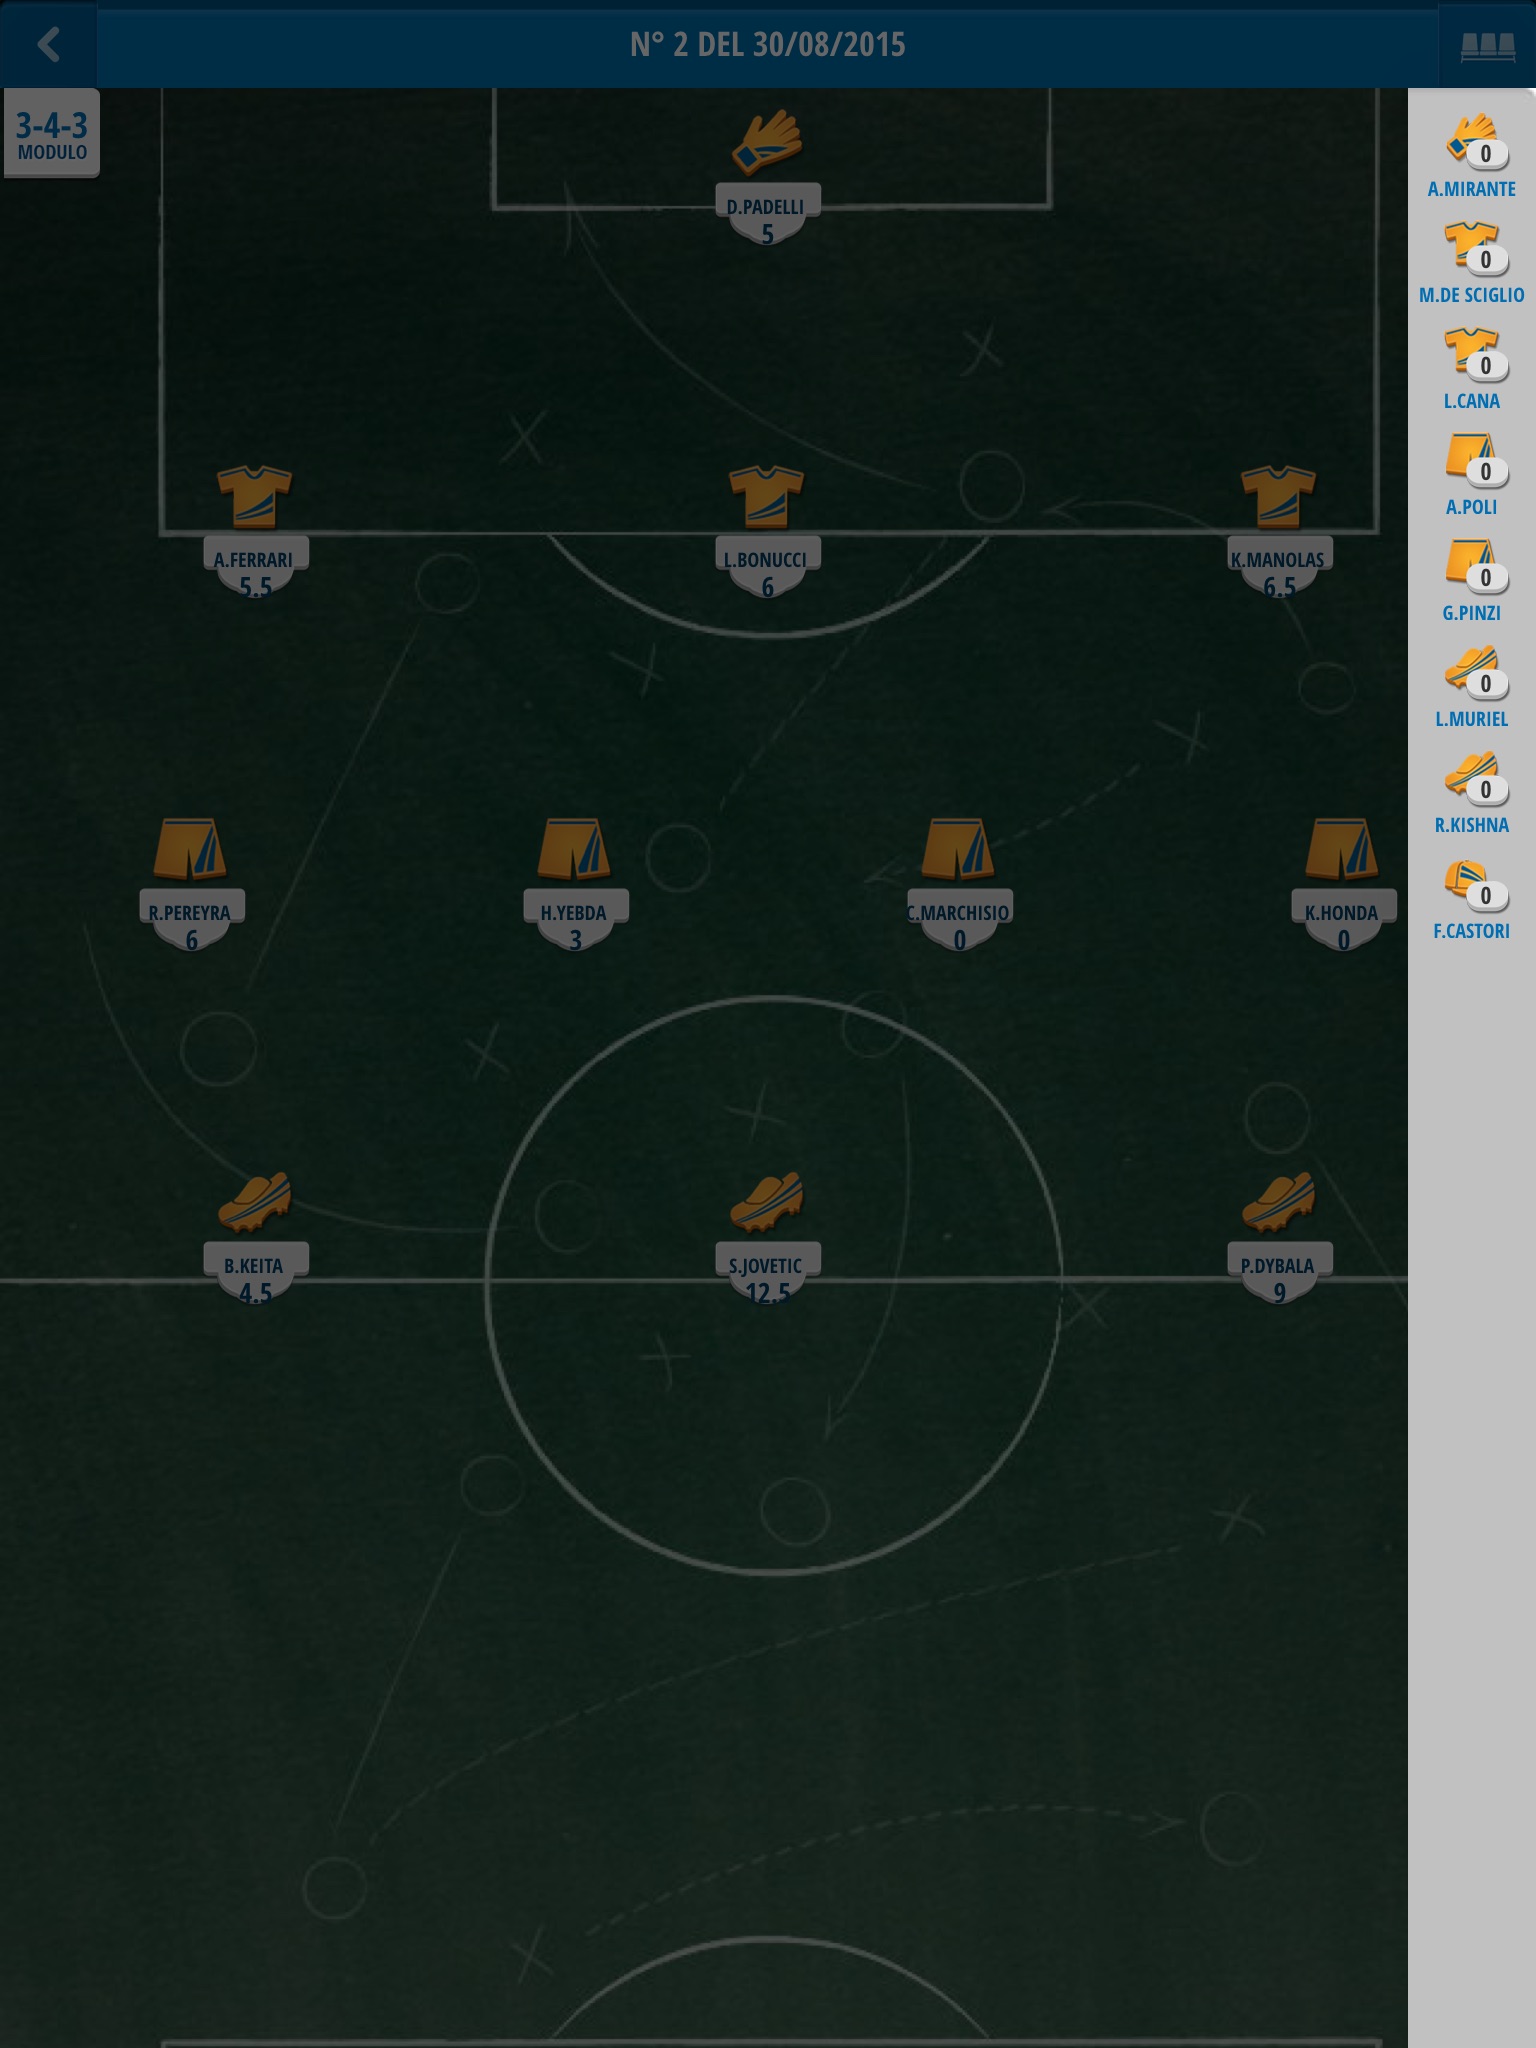 Mister Calcio Cup screenshot 2